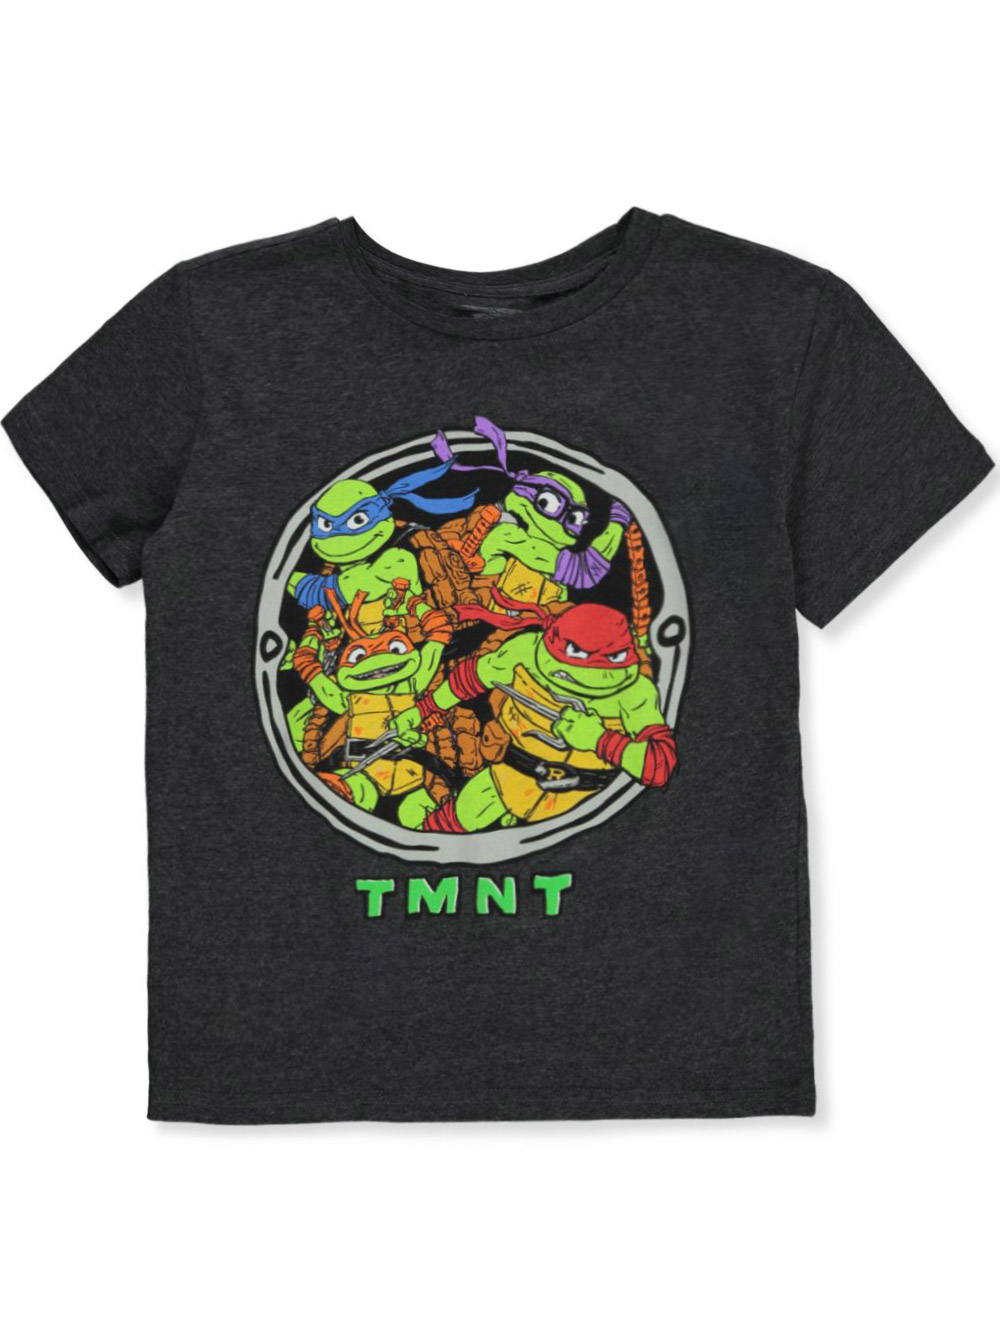 Teenage Mutant Ninja Turtles Boys Cotton Pajama 4 Pc. Set, Boys 8-20, Clothing & Accessories